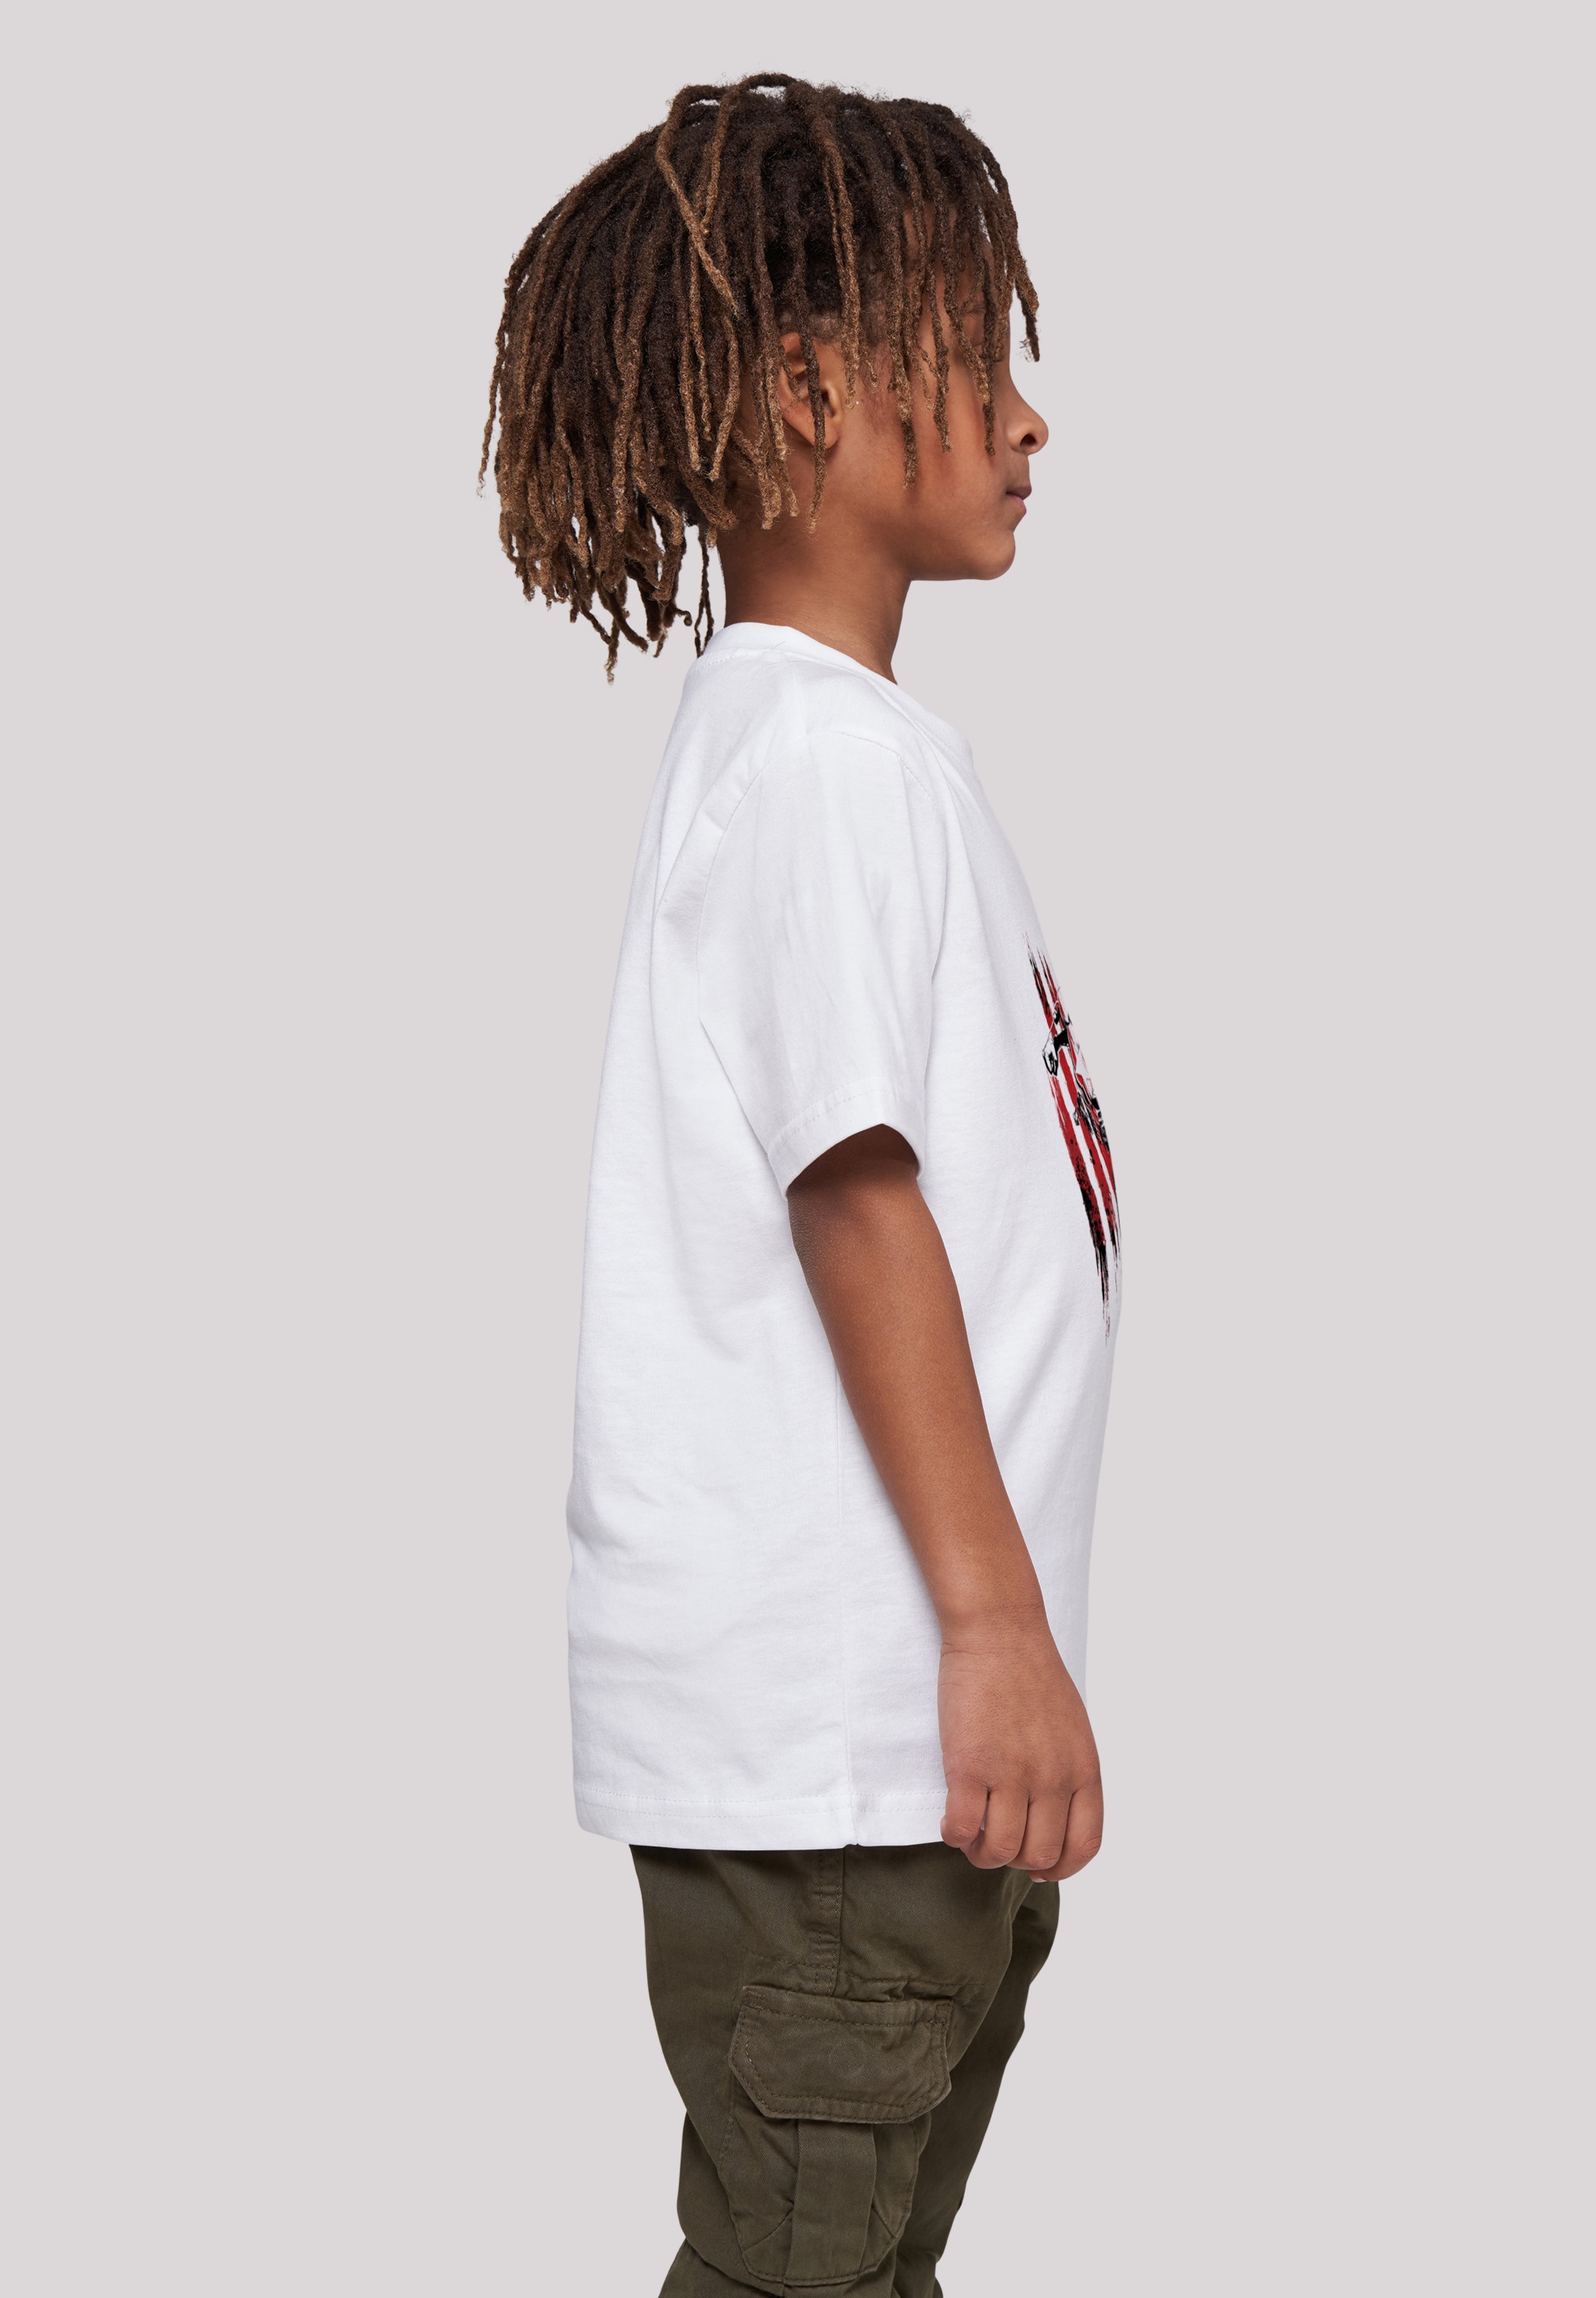 BAUR F4NT4STIC America Kinder,Premium Unisex Captain bestellen »T-Shirt Print | Streaks\'«, Avengers \'Marvel T-Shirt Merch,Jungen,Mädchen,Logo